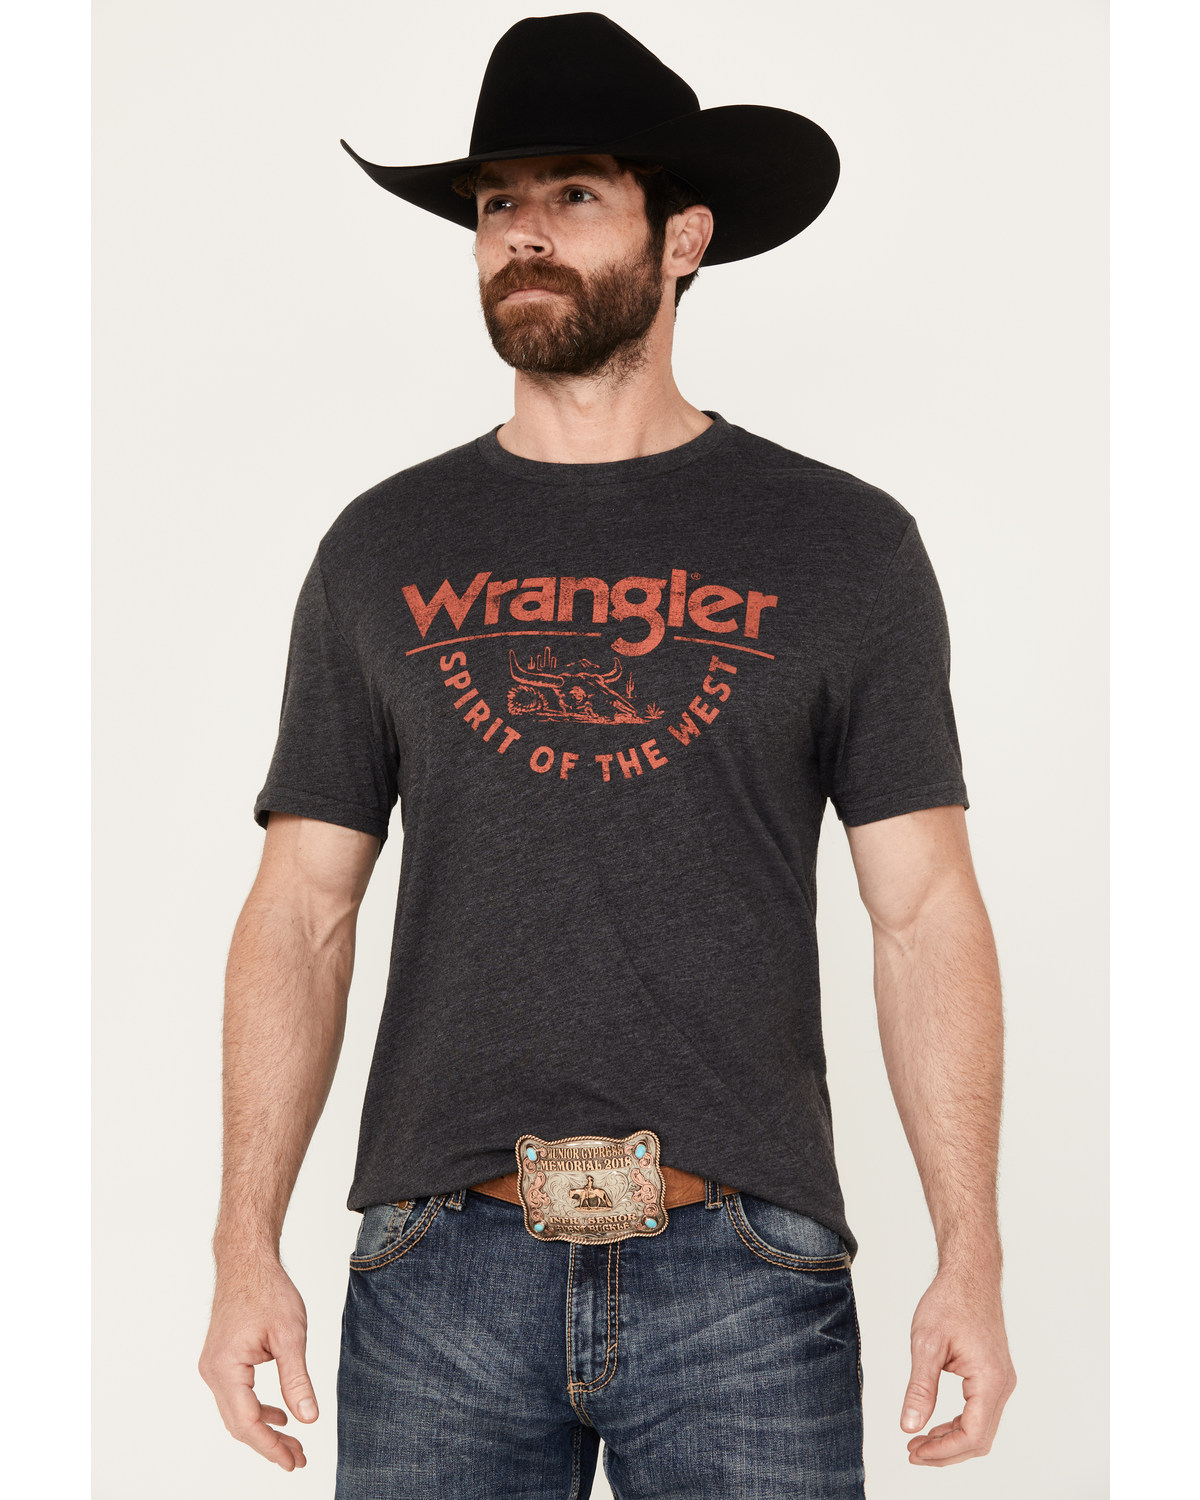 Wrangler Men's Boot Barn Exclusive Spirit of the West Short Sleeve Graphic T-Shirt